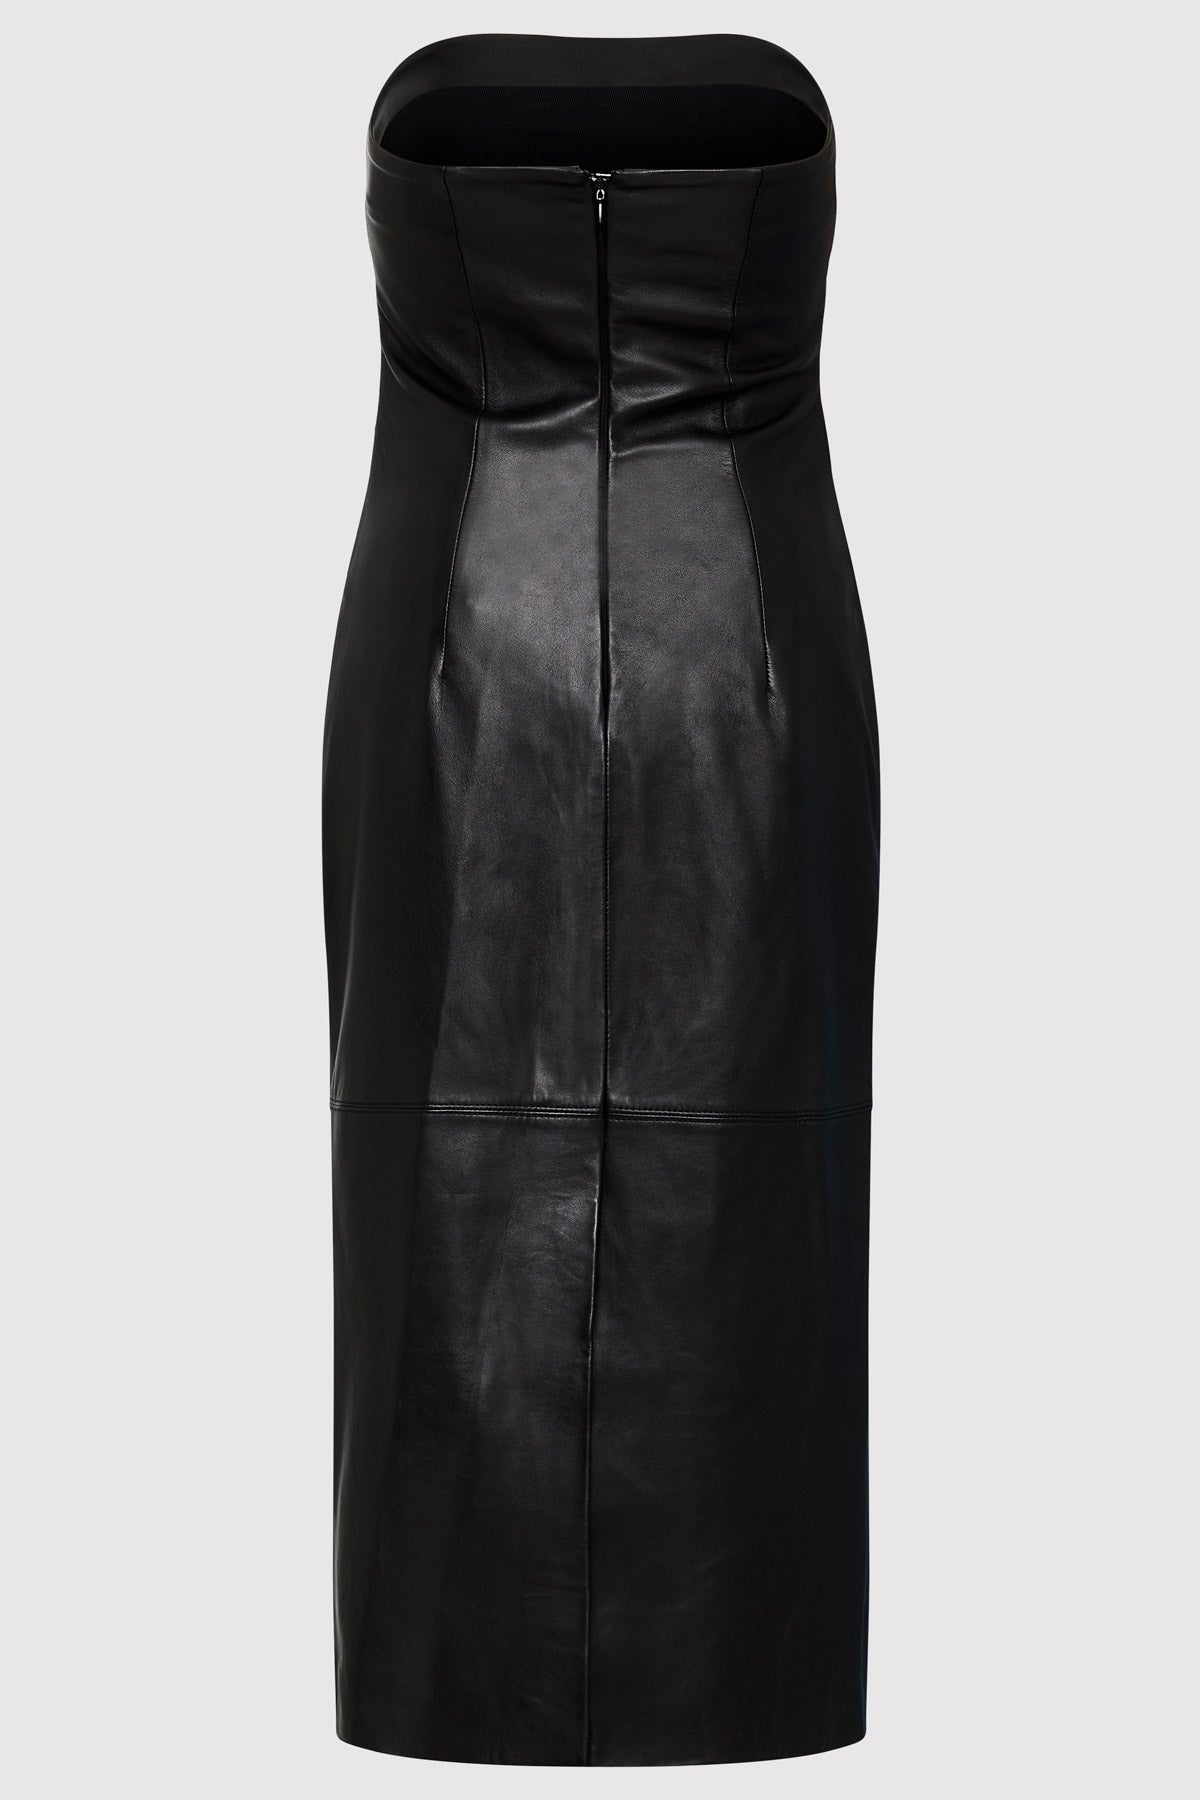 Tuck Detail Leather Dress - Black